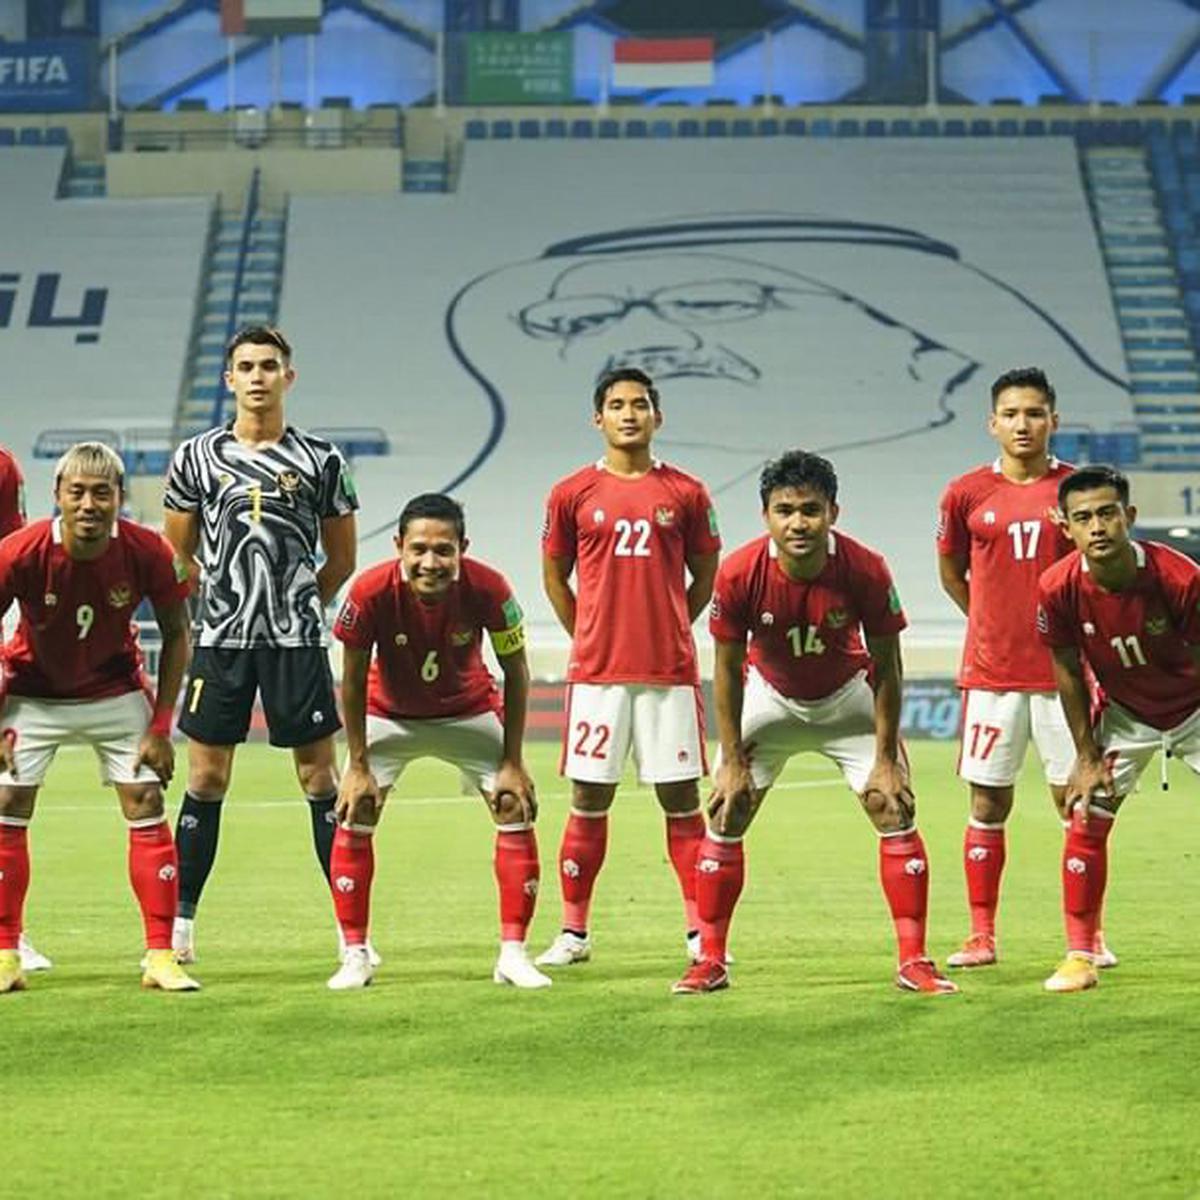 Pasukan bola sepak kebangsaan vietnam lwn pasukan bola sepak kebangsaan china